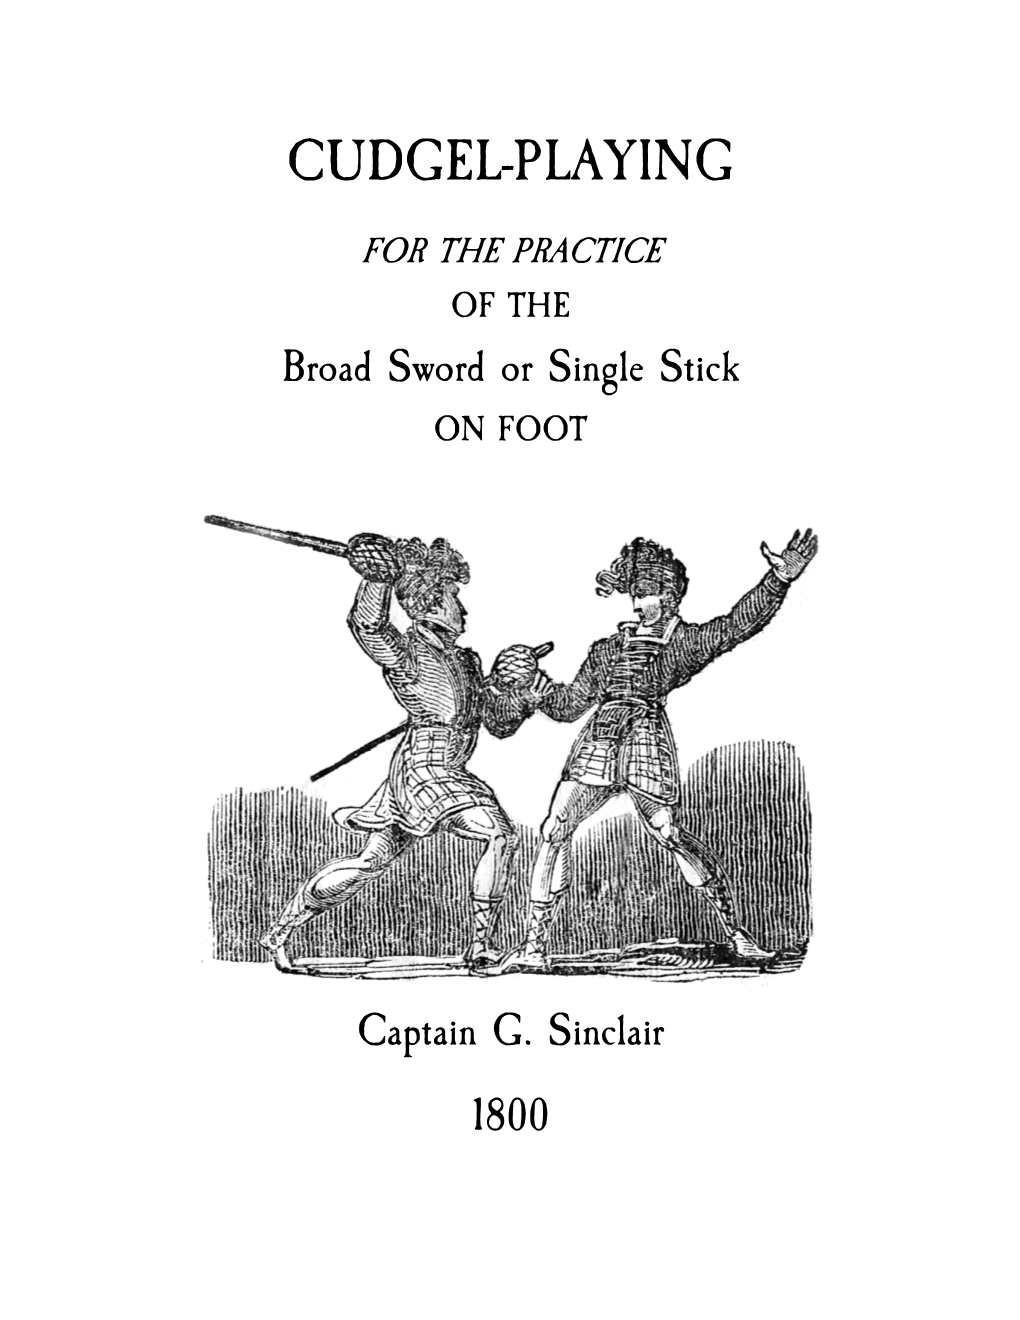 Cudgel-Playing